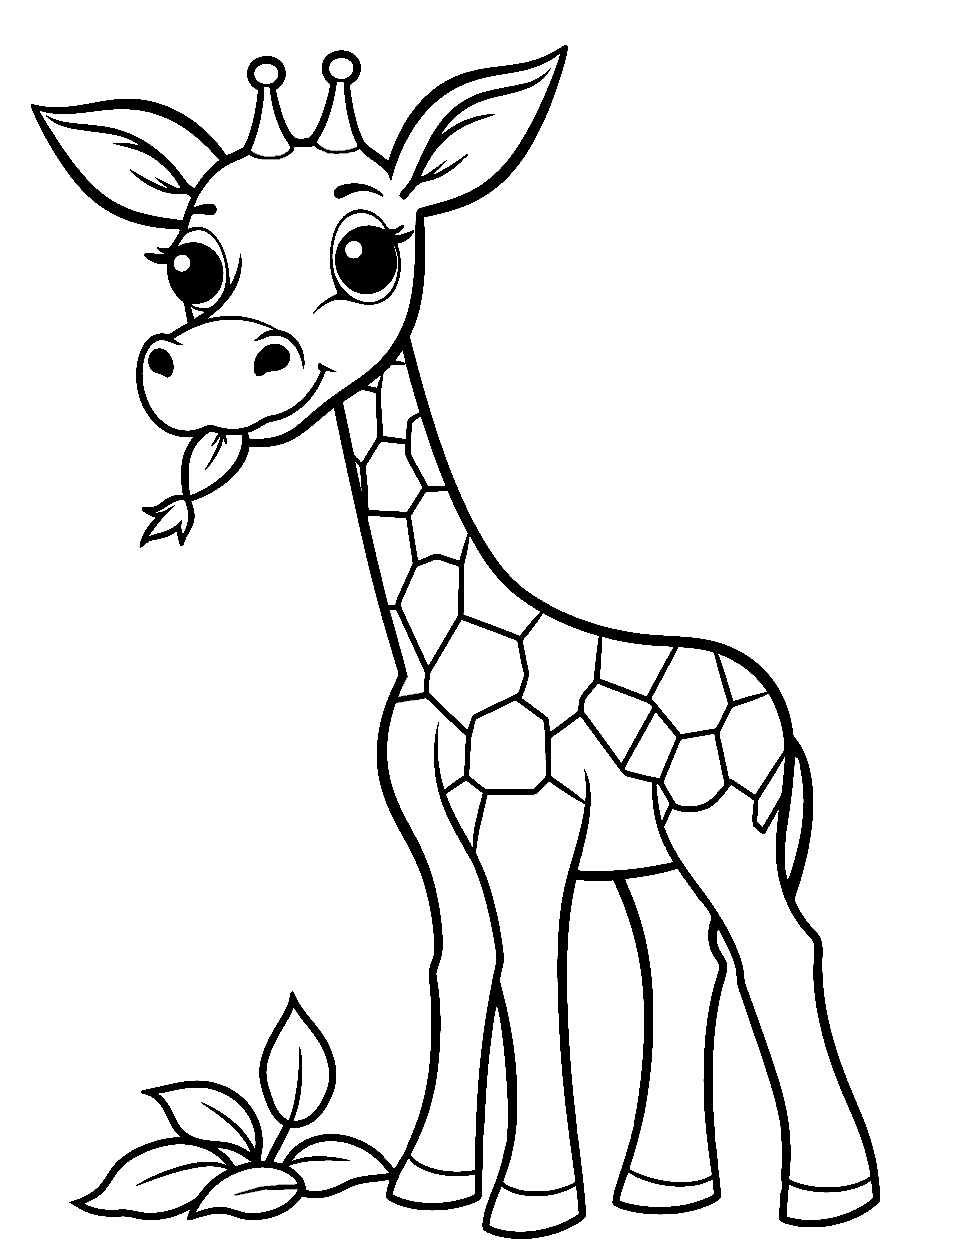 Kawaii Giraffe Snacking Coloring Page - A super cute kawaii giraffe munching on some leaves.